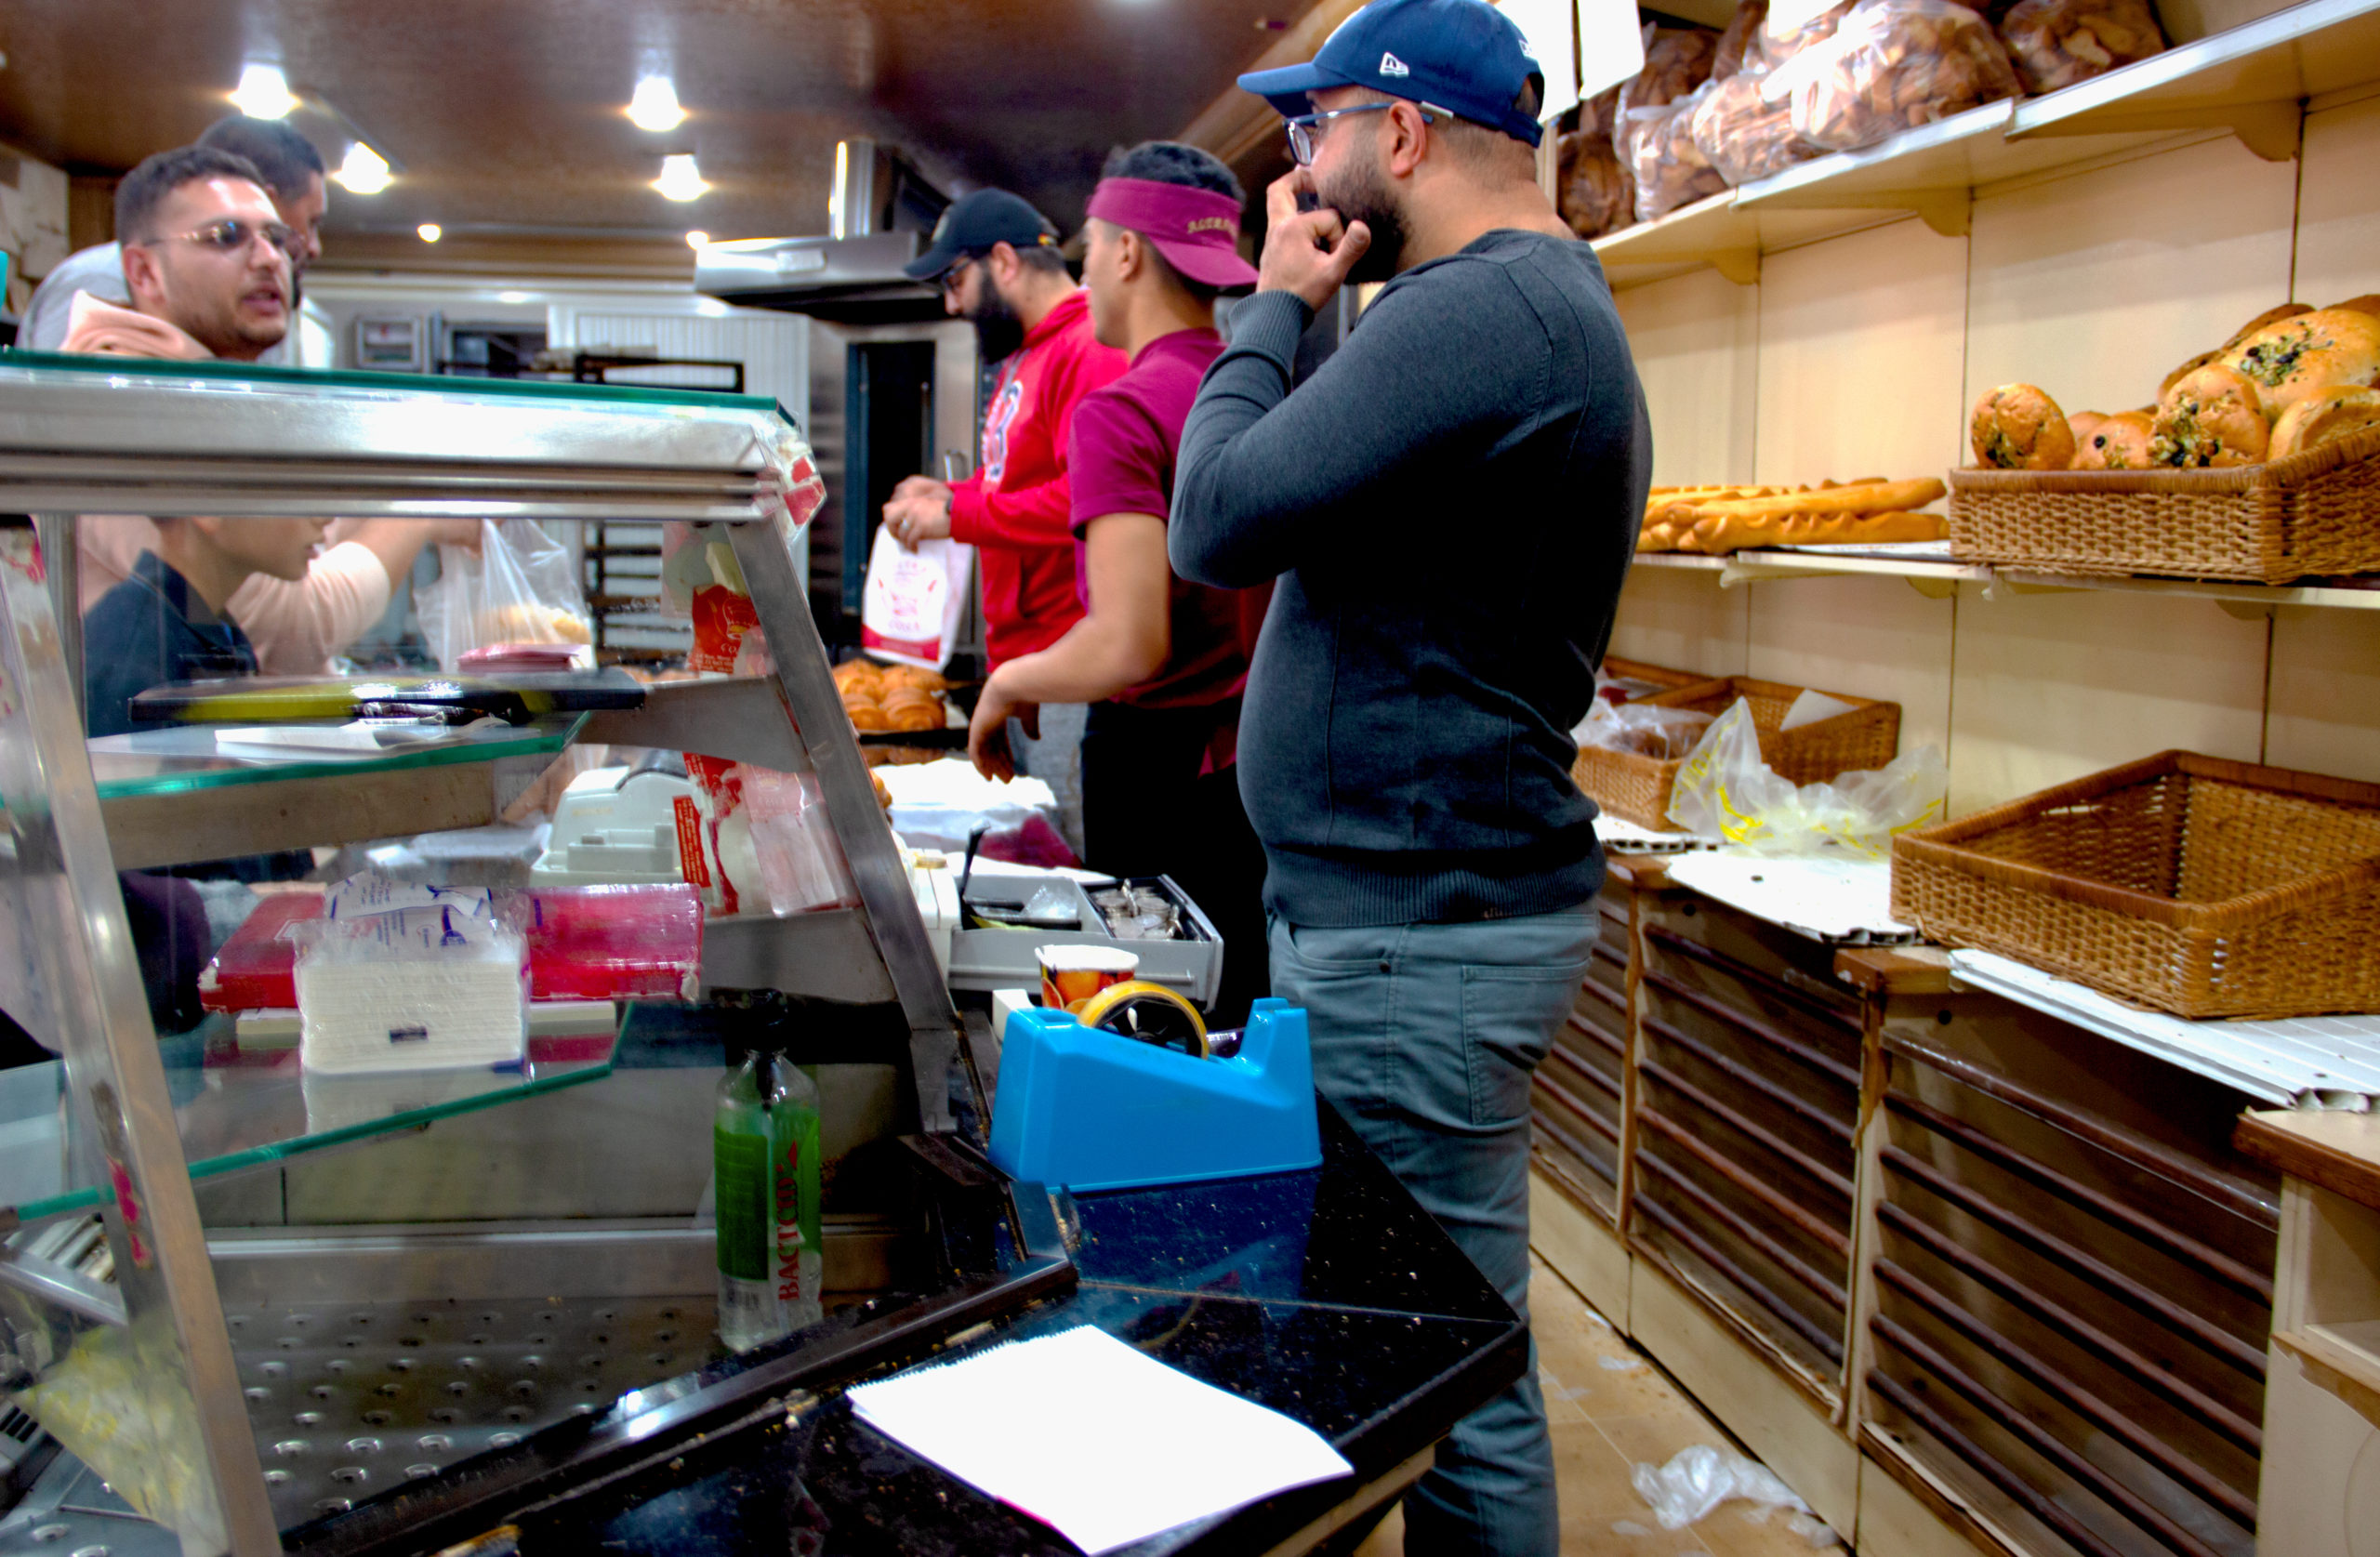 Tunisians line for bread in local bakeries during Ramadan / credit: Alessandra Bajec